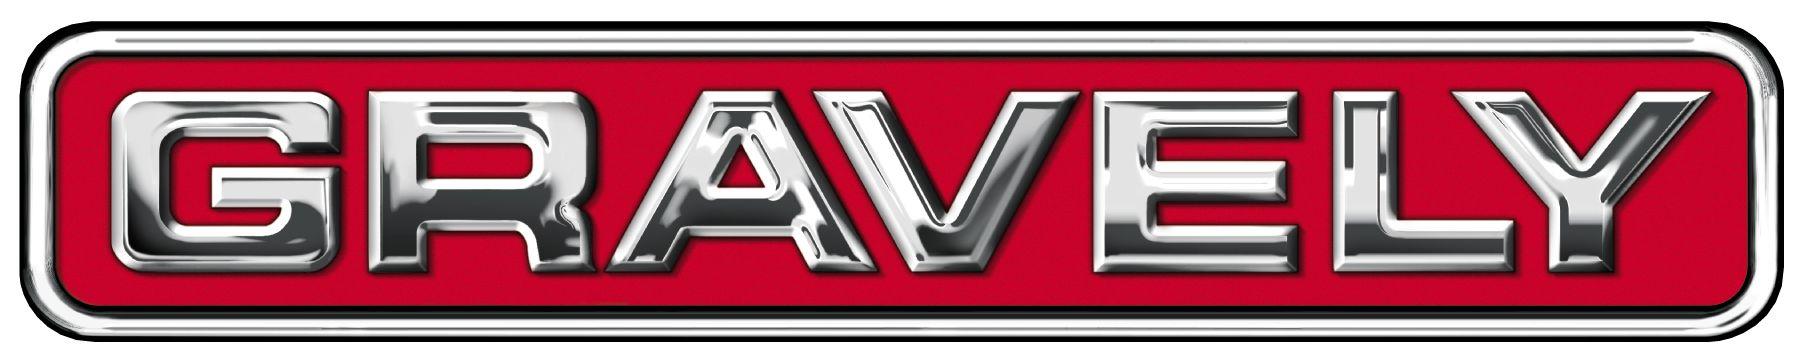 Gravely Logo - Gravely Pro Turn 60 Chainsaws & Outdoor Power LTD